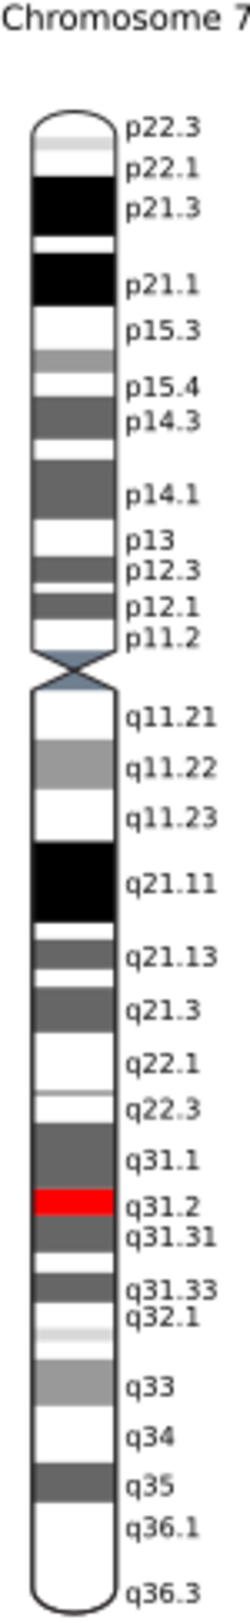 CFTR gene on chromosome 7.svg